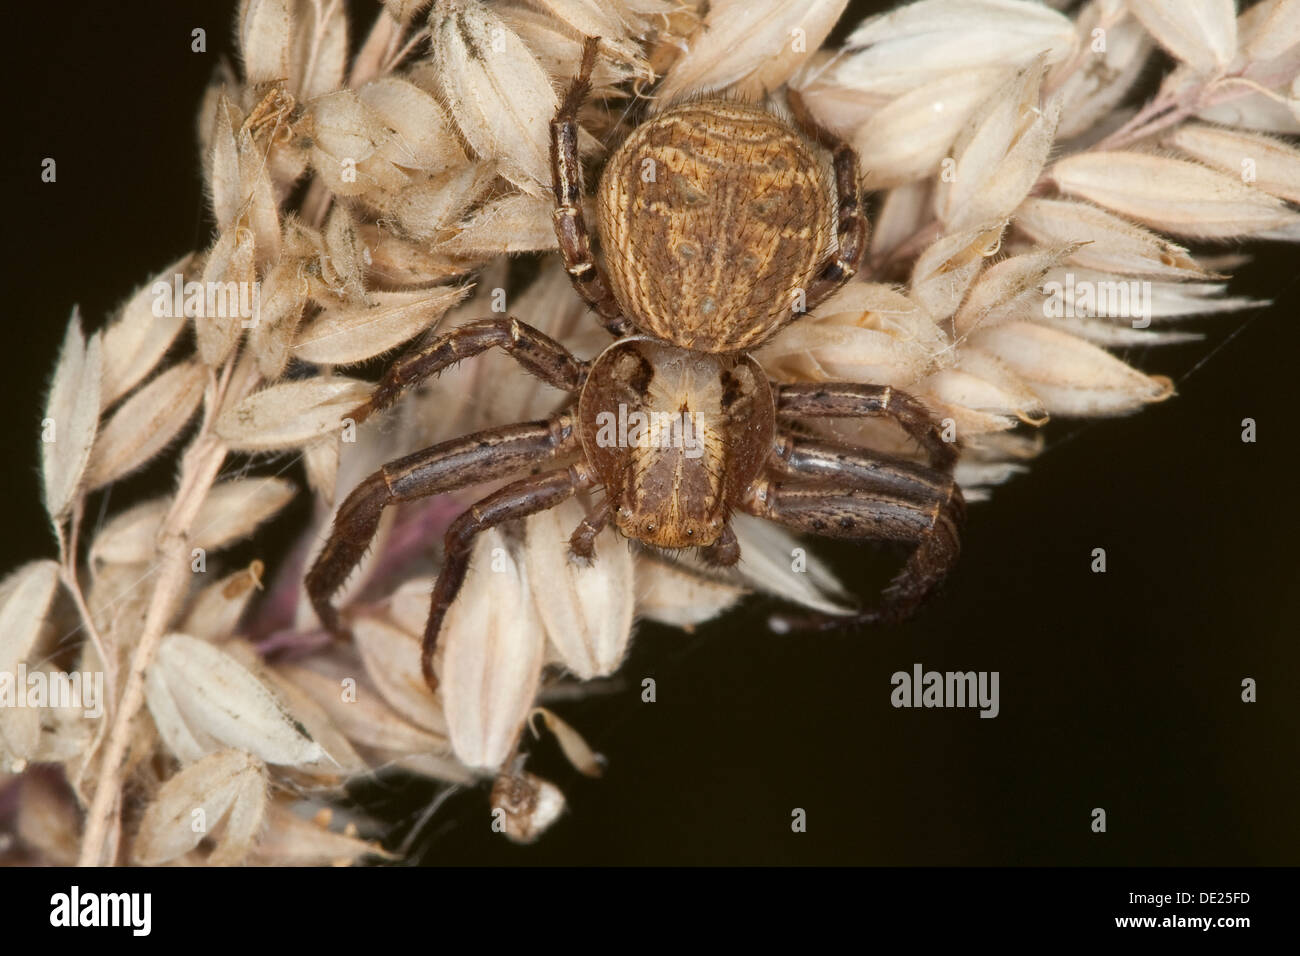 Araignée Crabe, Braune, Busch-Krabbenspinne Buschkrabbenspinne Krabbenspinne, Xysticus, cf. cristatus Thomisidae, araignées-crabes, Banque D'Images